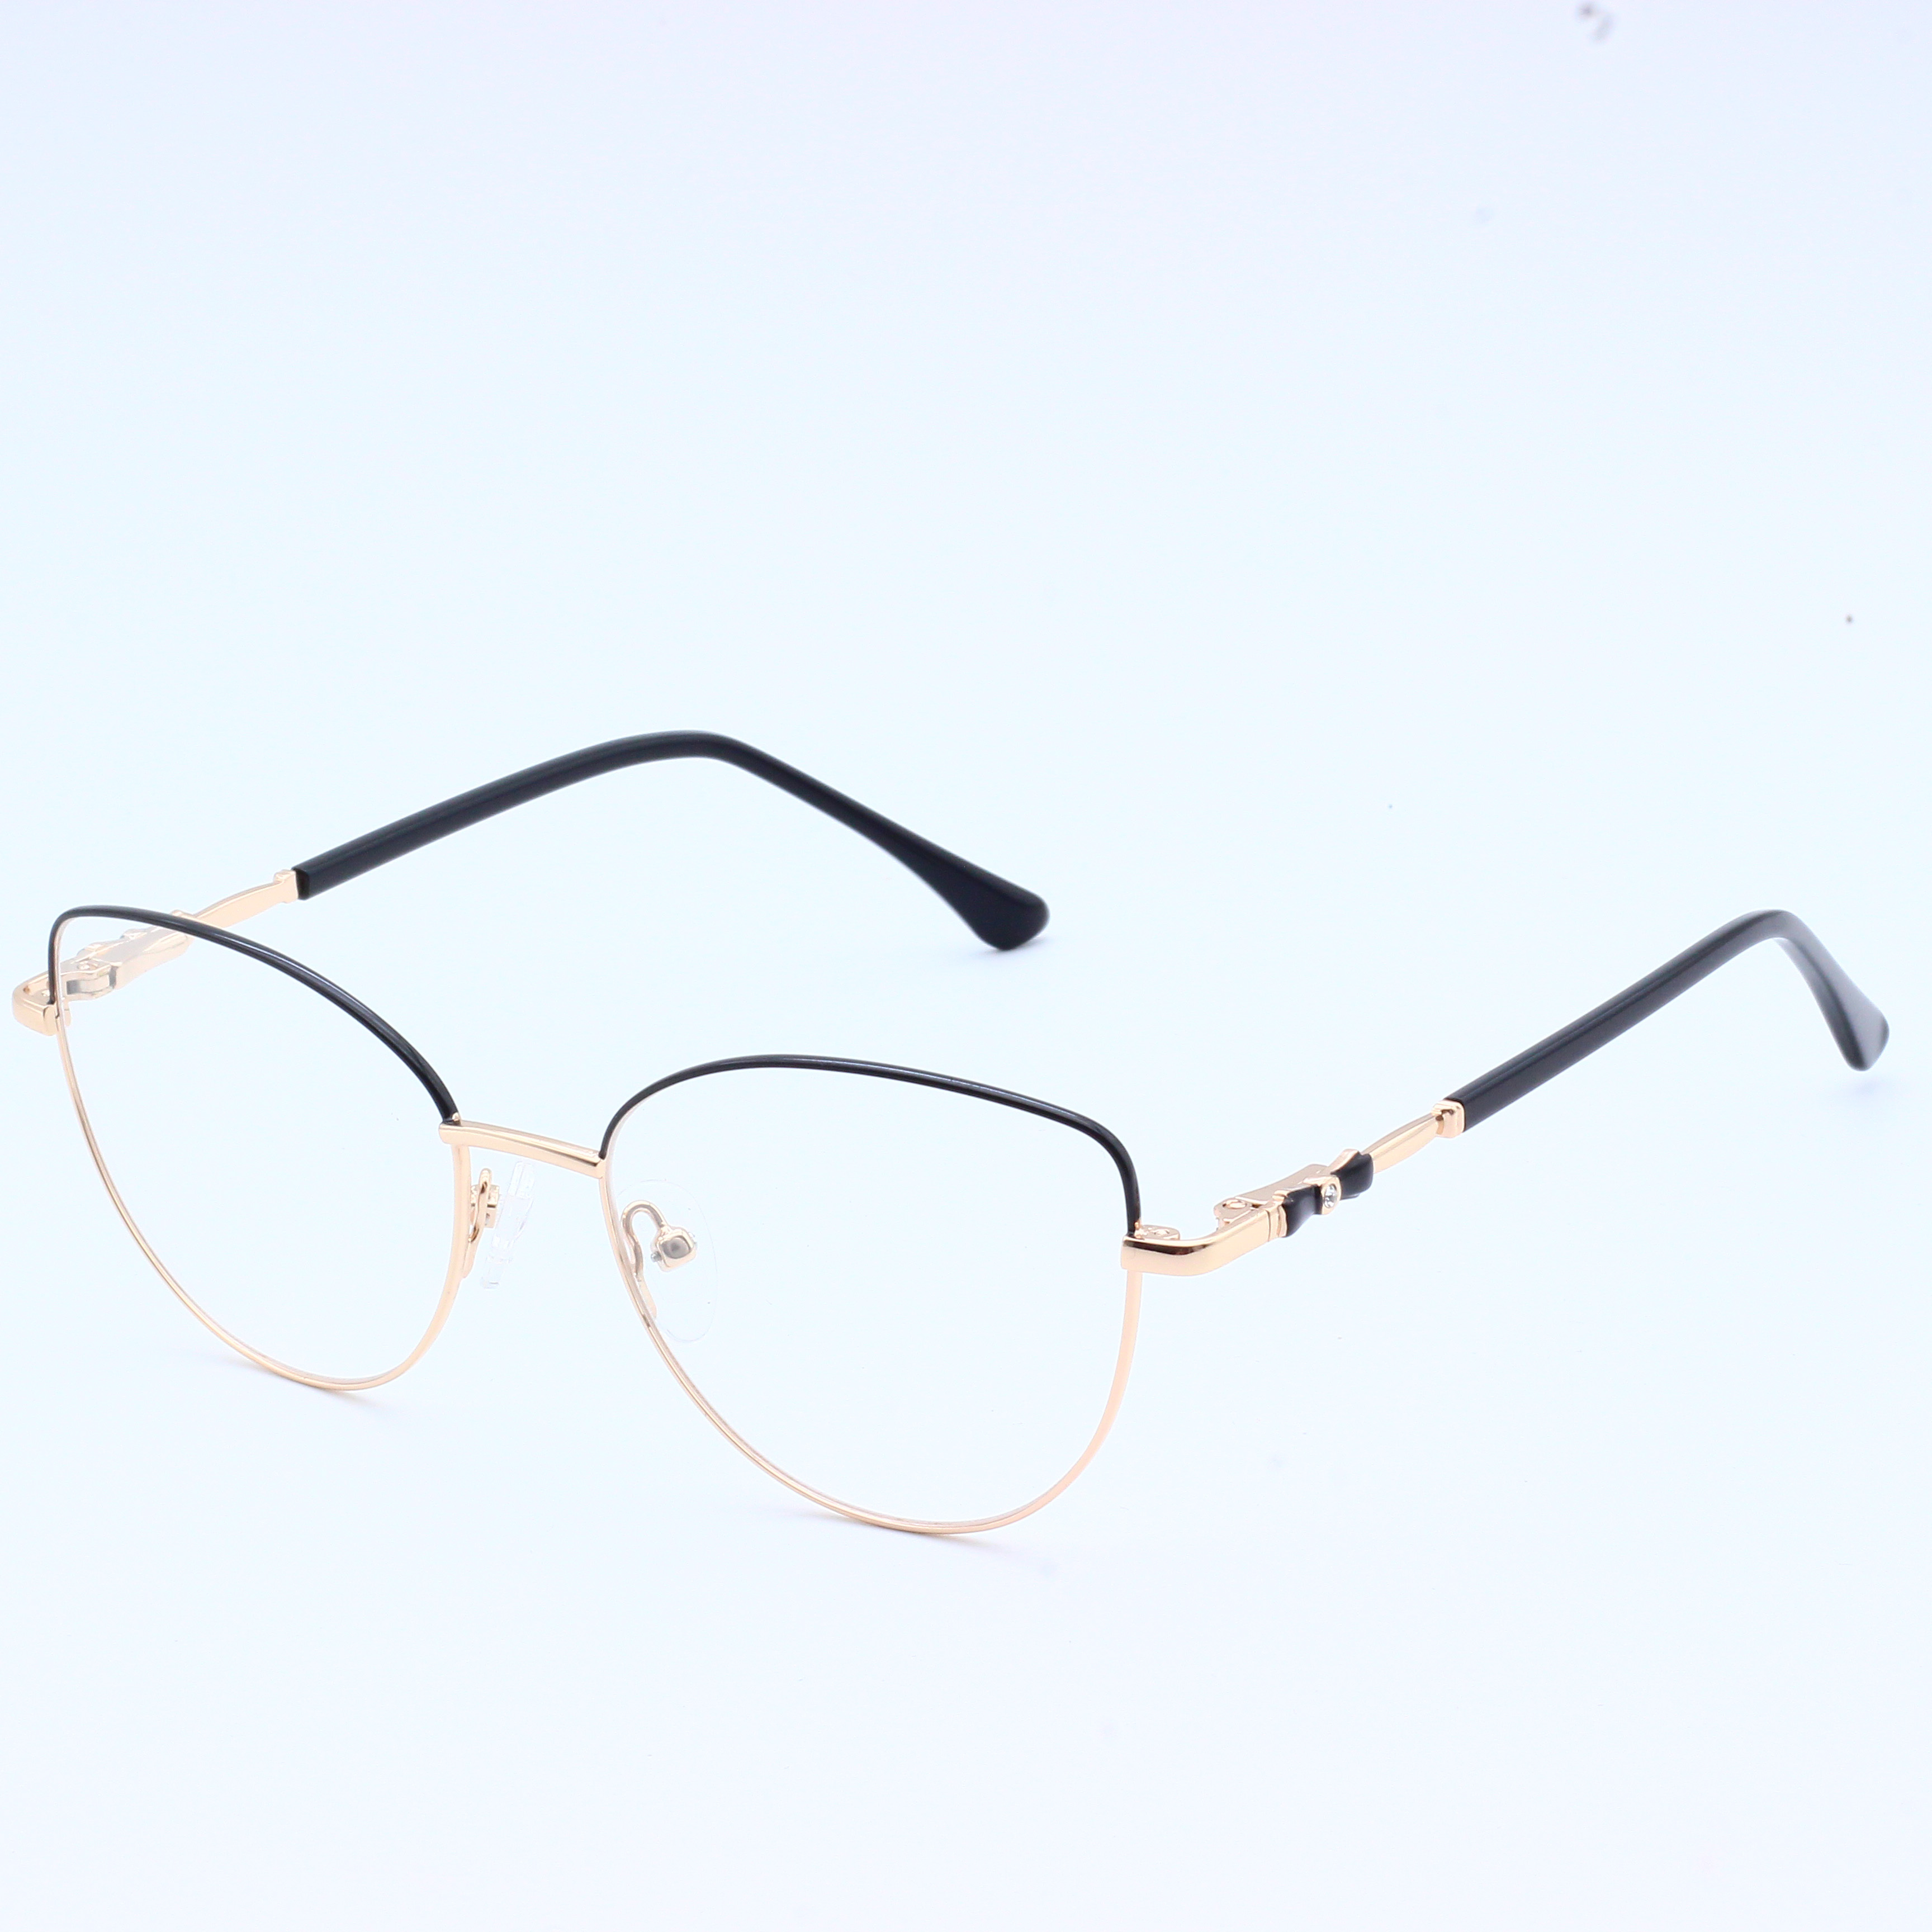 Stock clearance metal optical glasses frame random stainless metal (5)